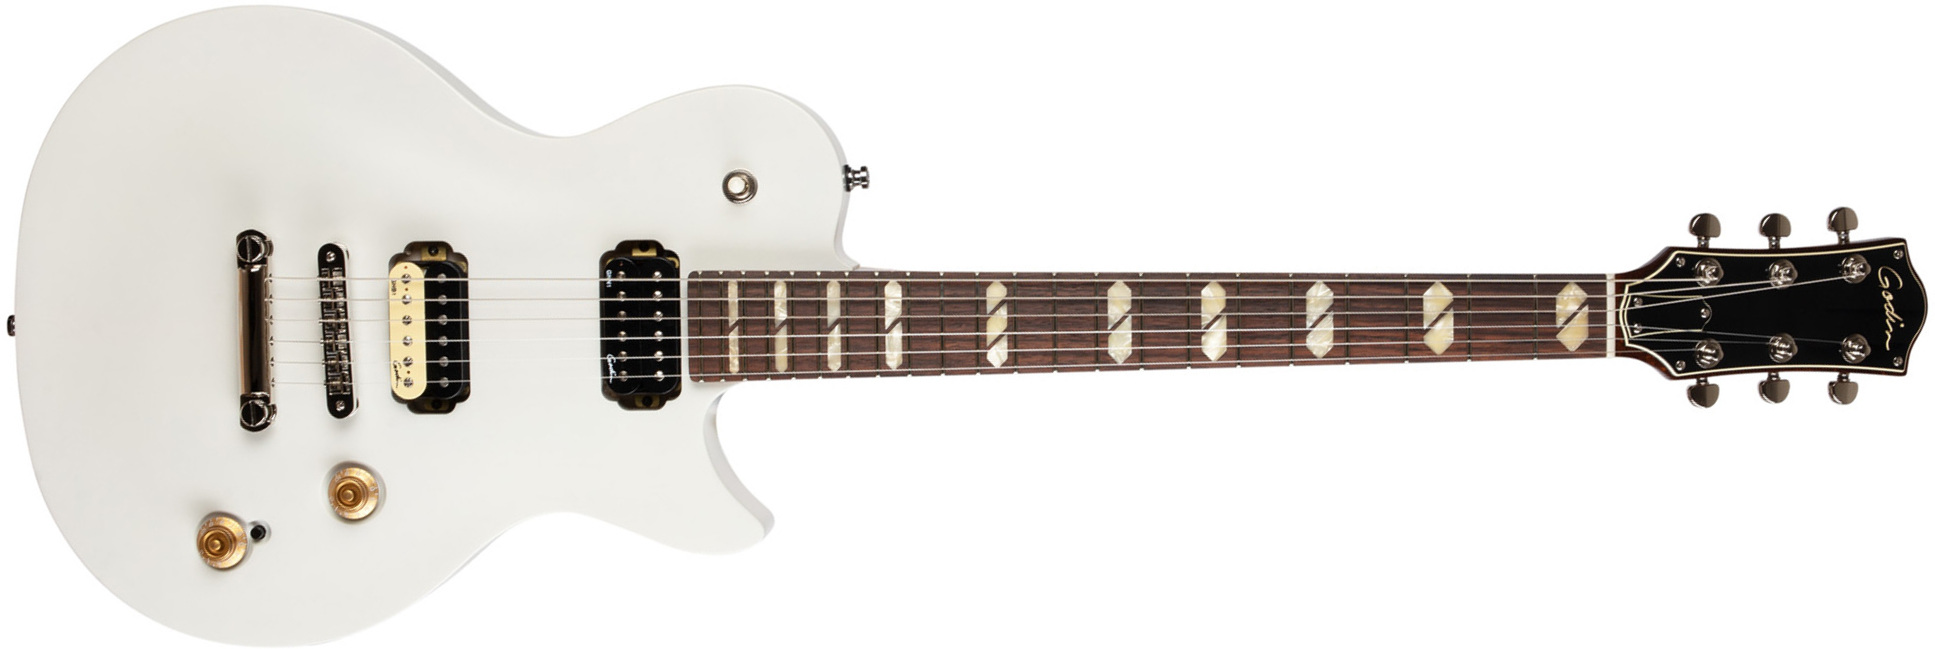 Godin Summit Classic Hh Ht Rw - Trans White - Single cut electric guitar - Main picture